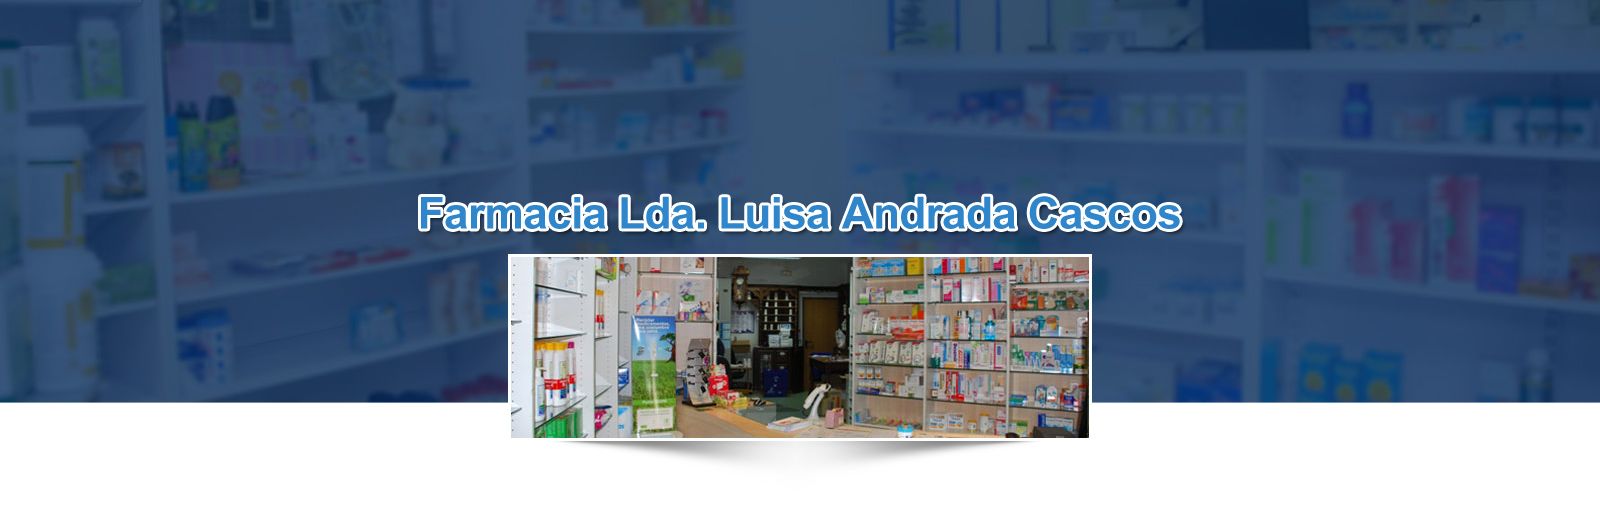 Farmacia Lda. Luisa Andrada Cascos banner